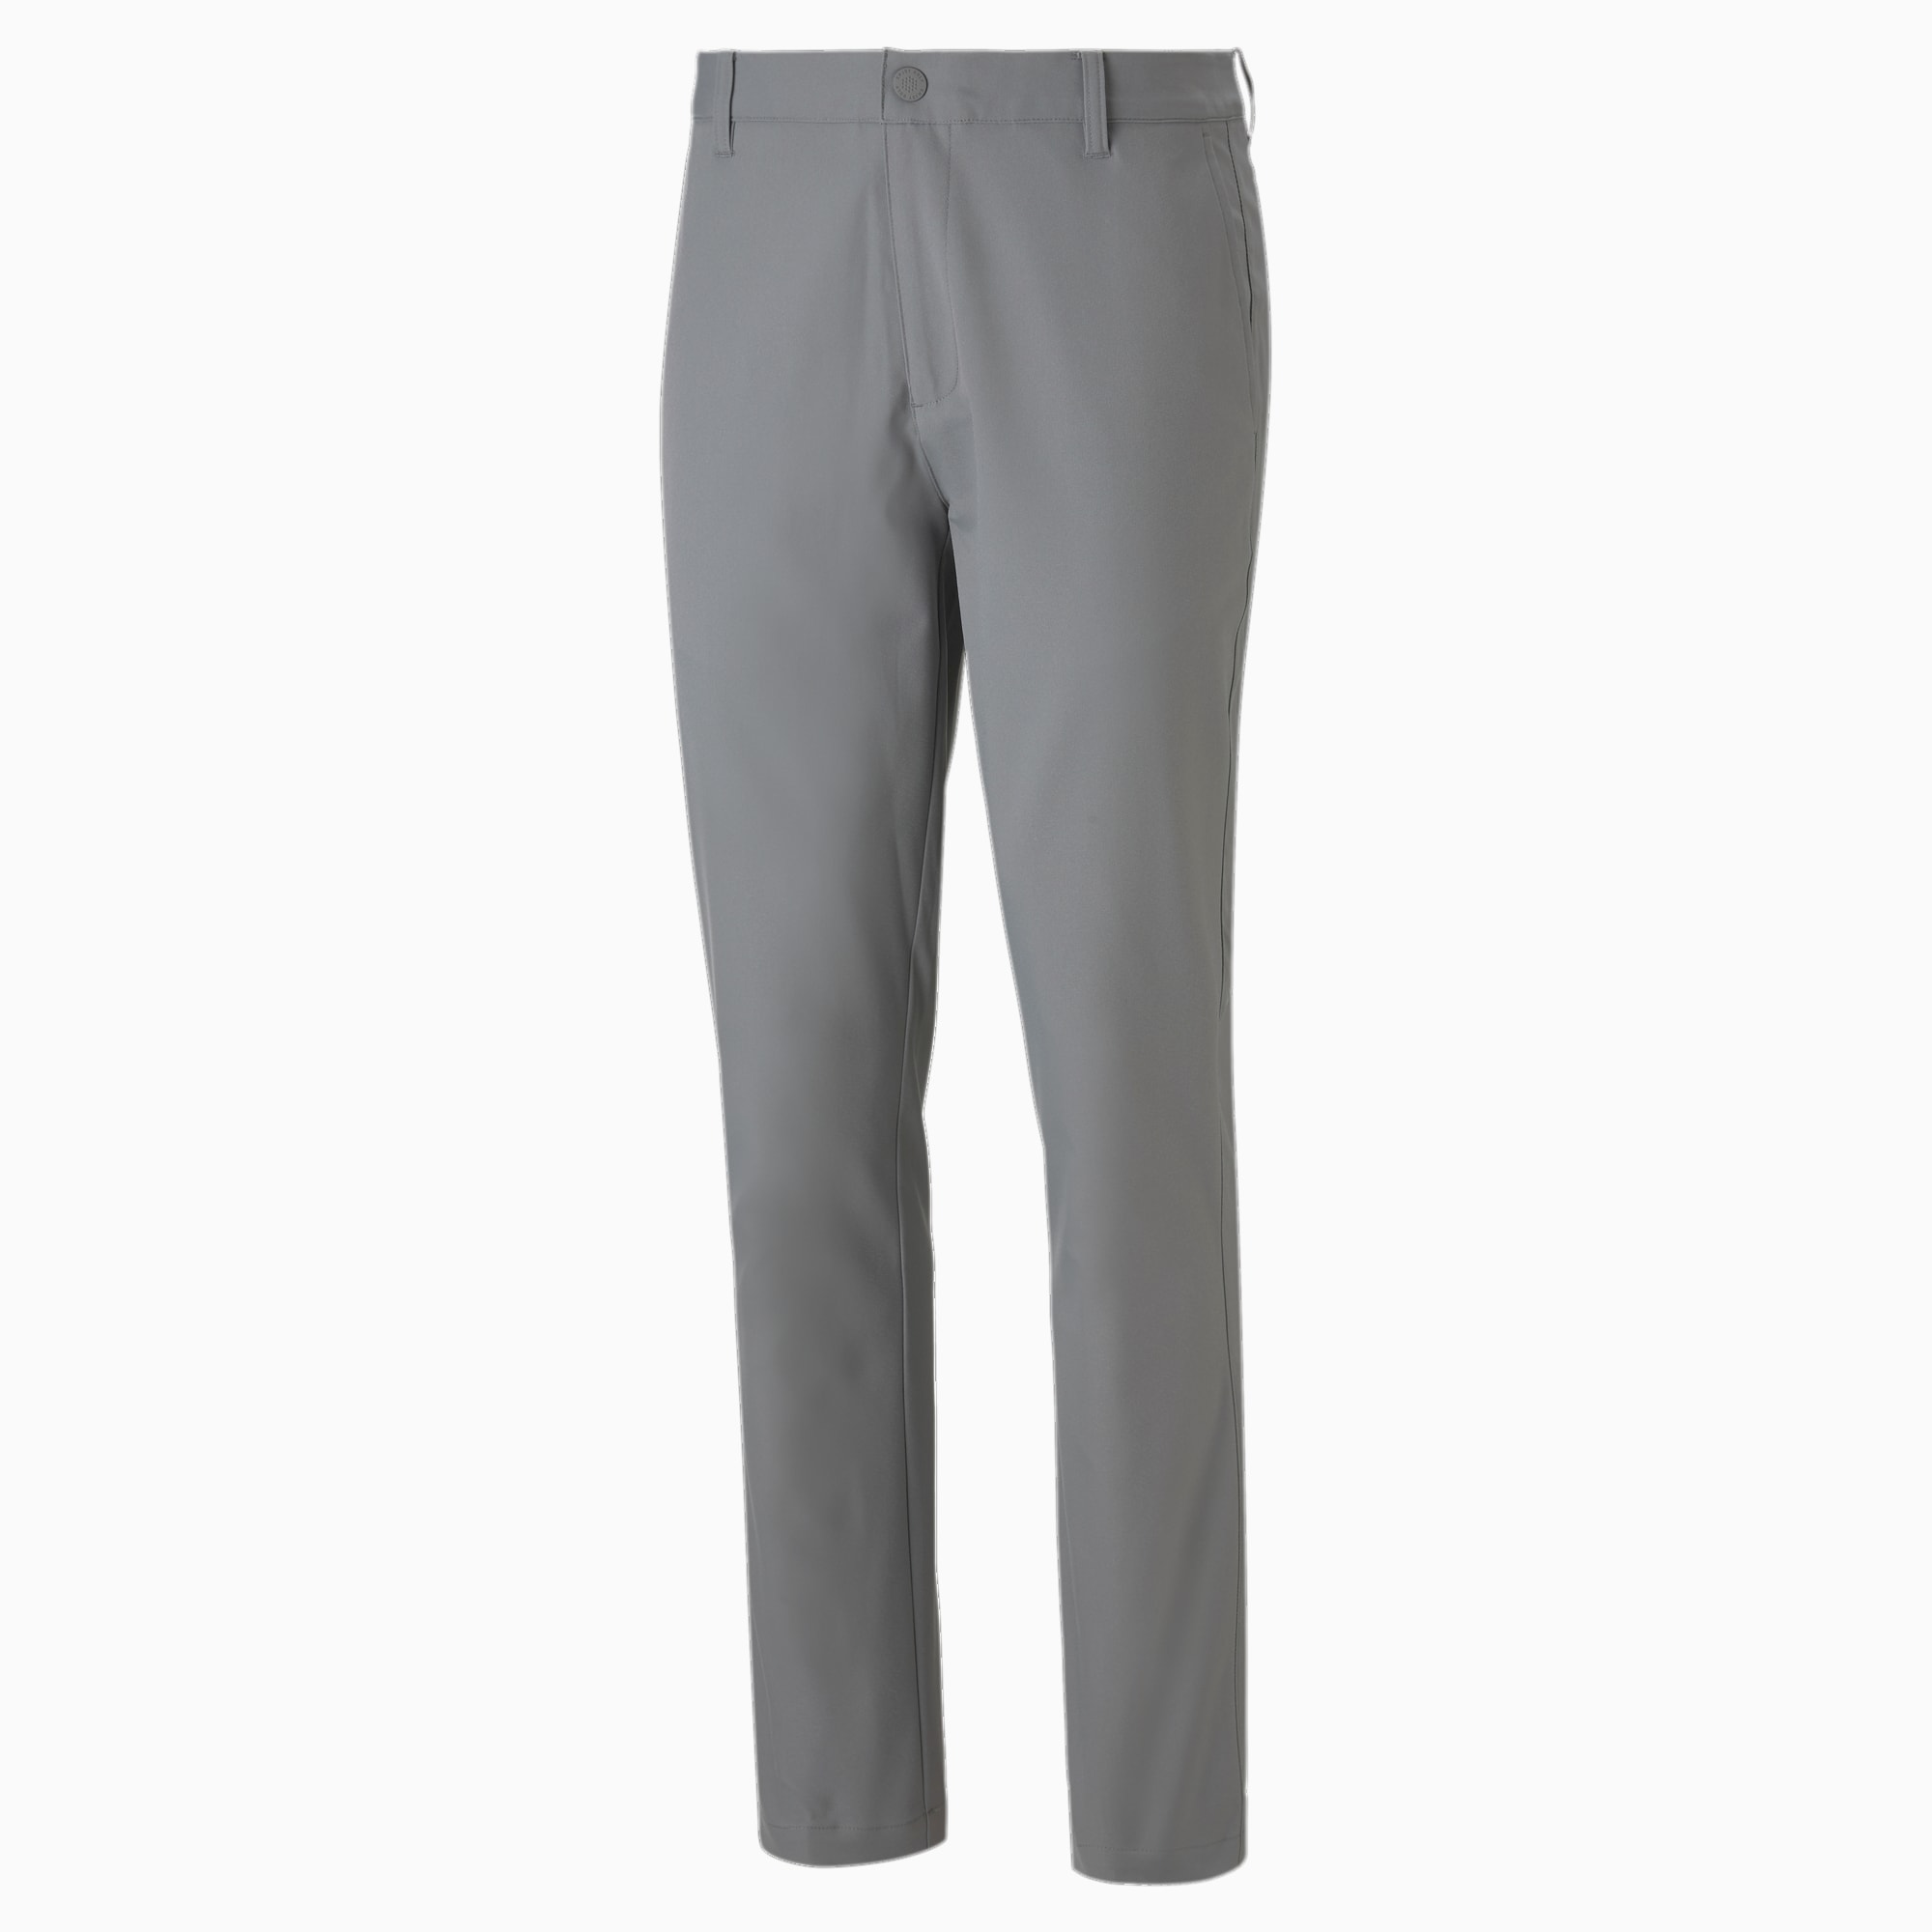 PUMA Dealer Tailored Golf Pants Men, Slate Sky, Size 35/32, Clothing